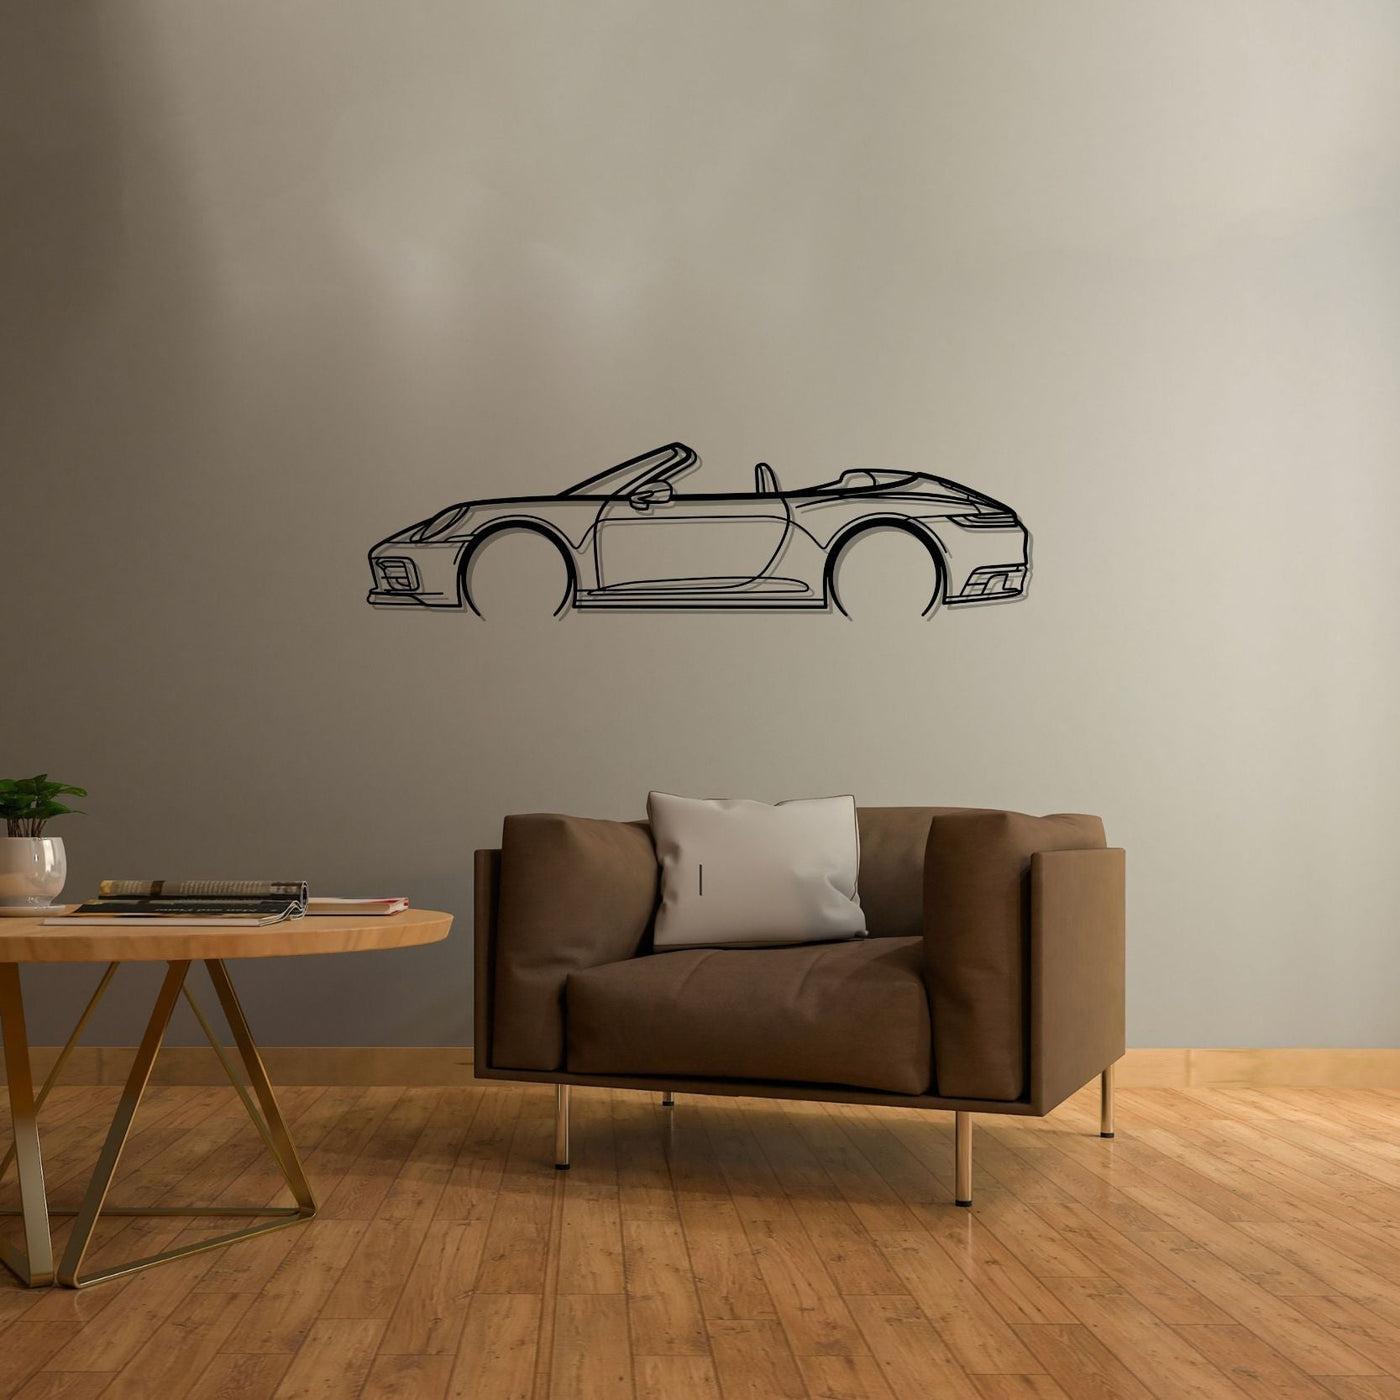 911 model 992 Convertible Detailed Silhouette Metal Wall Art